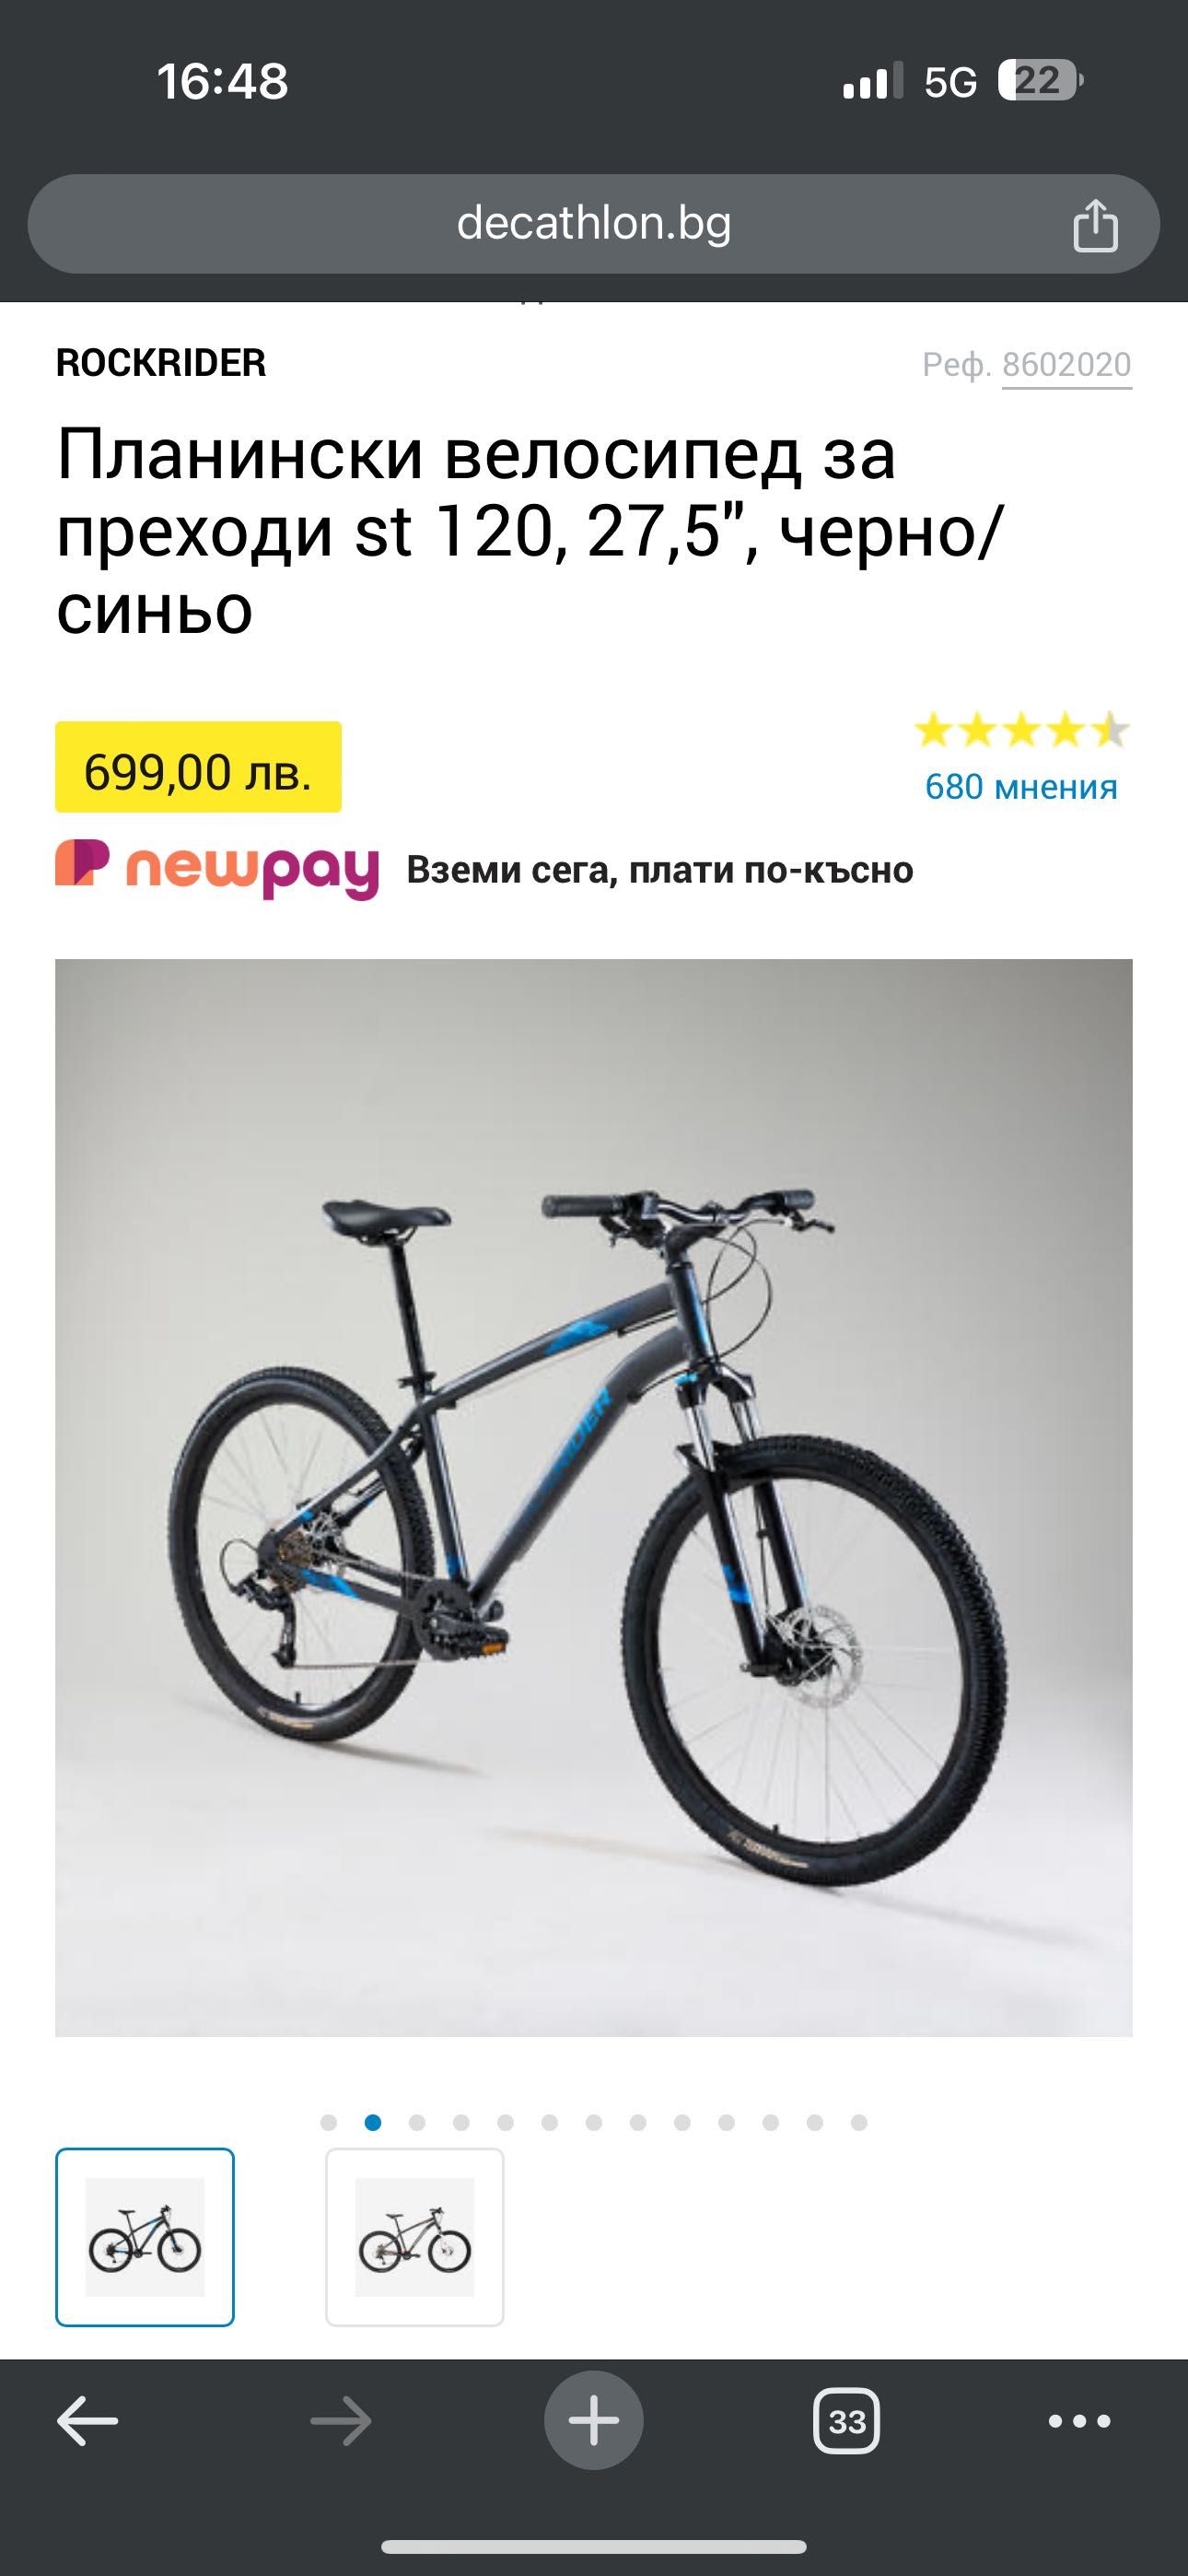 ROCKRIDER
Планински велосипед за преходи 27,5 черно/синьо